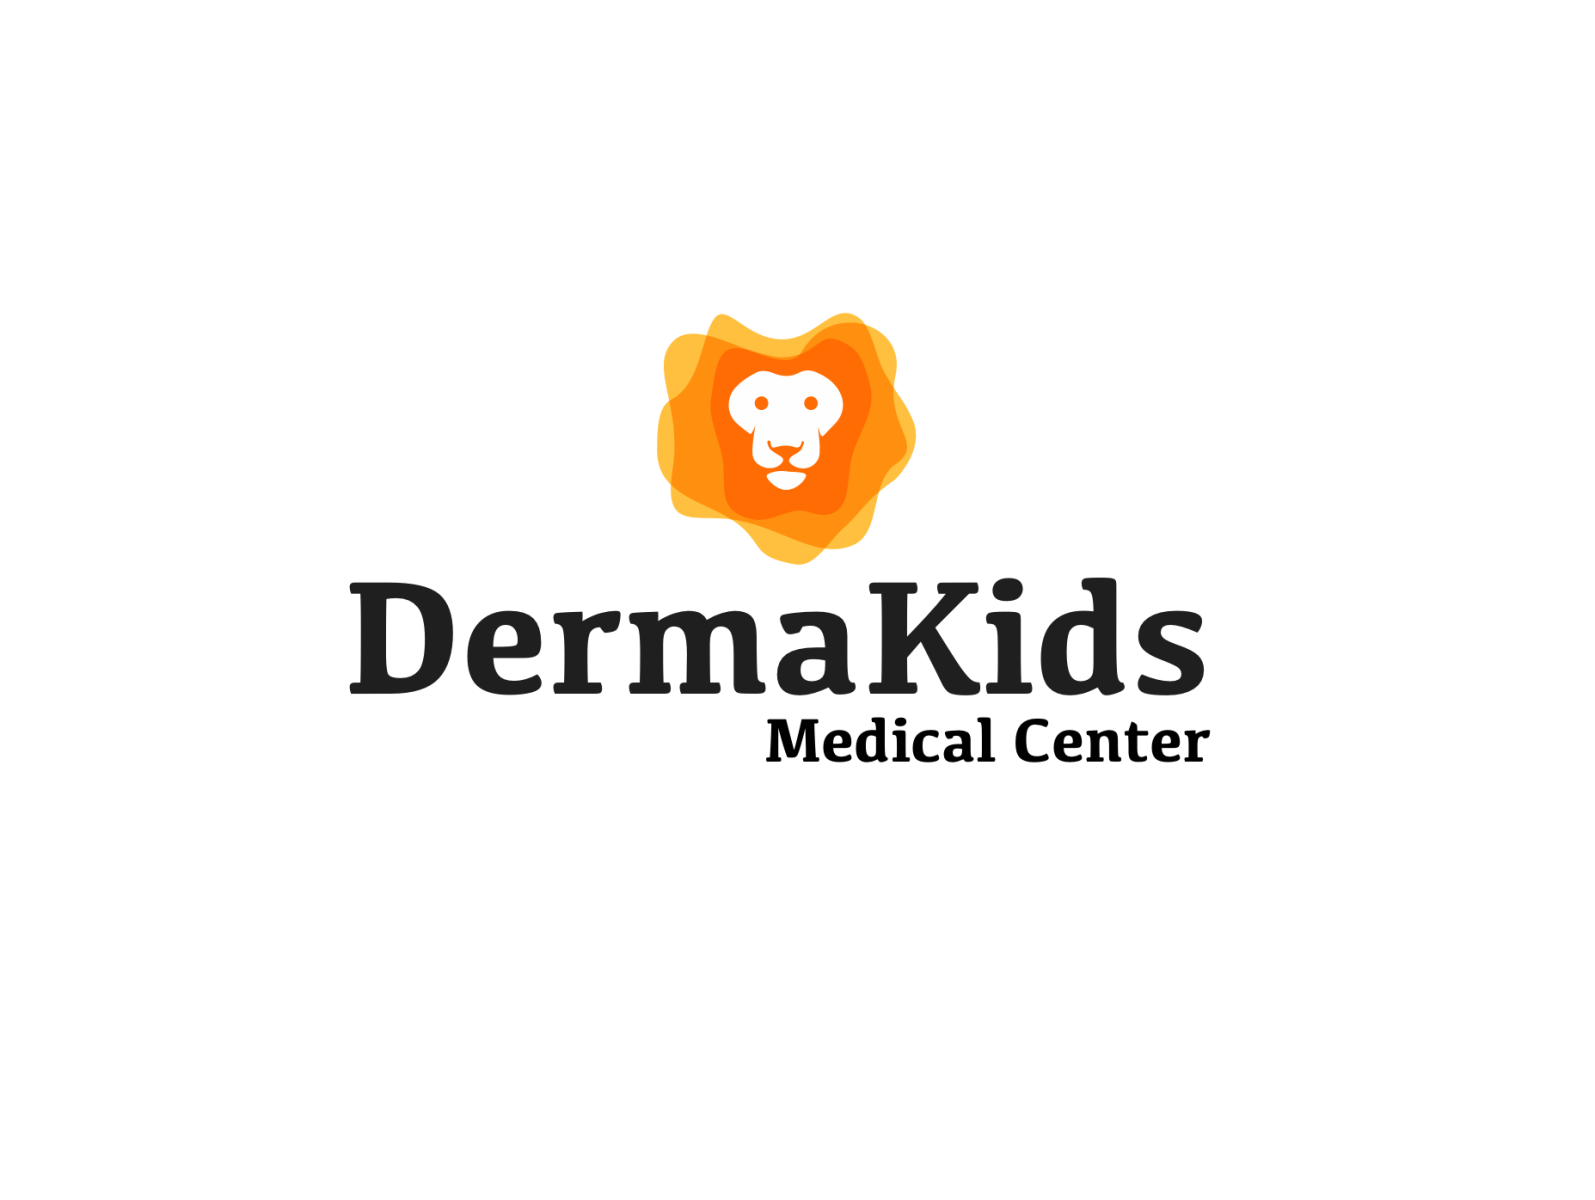 Pediatric Logos - 85+ Best Pediatric Logo Ideas. Free Pediatric Logo Maker.  | 99designs